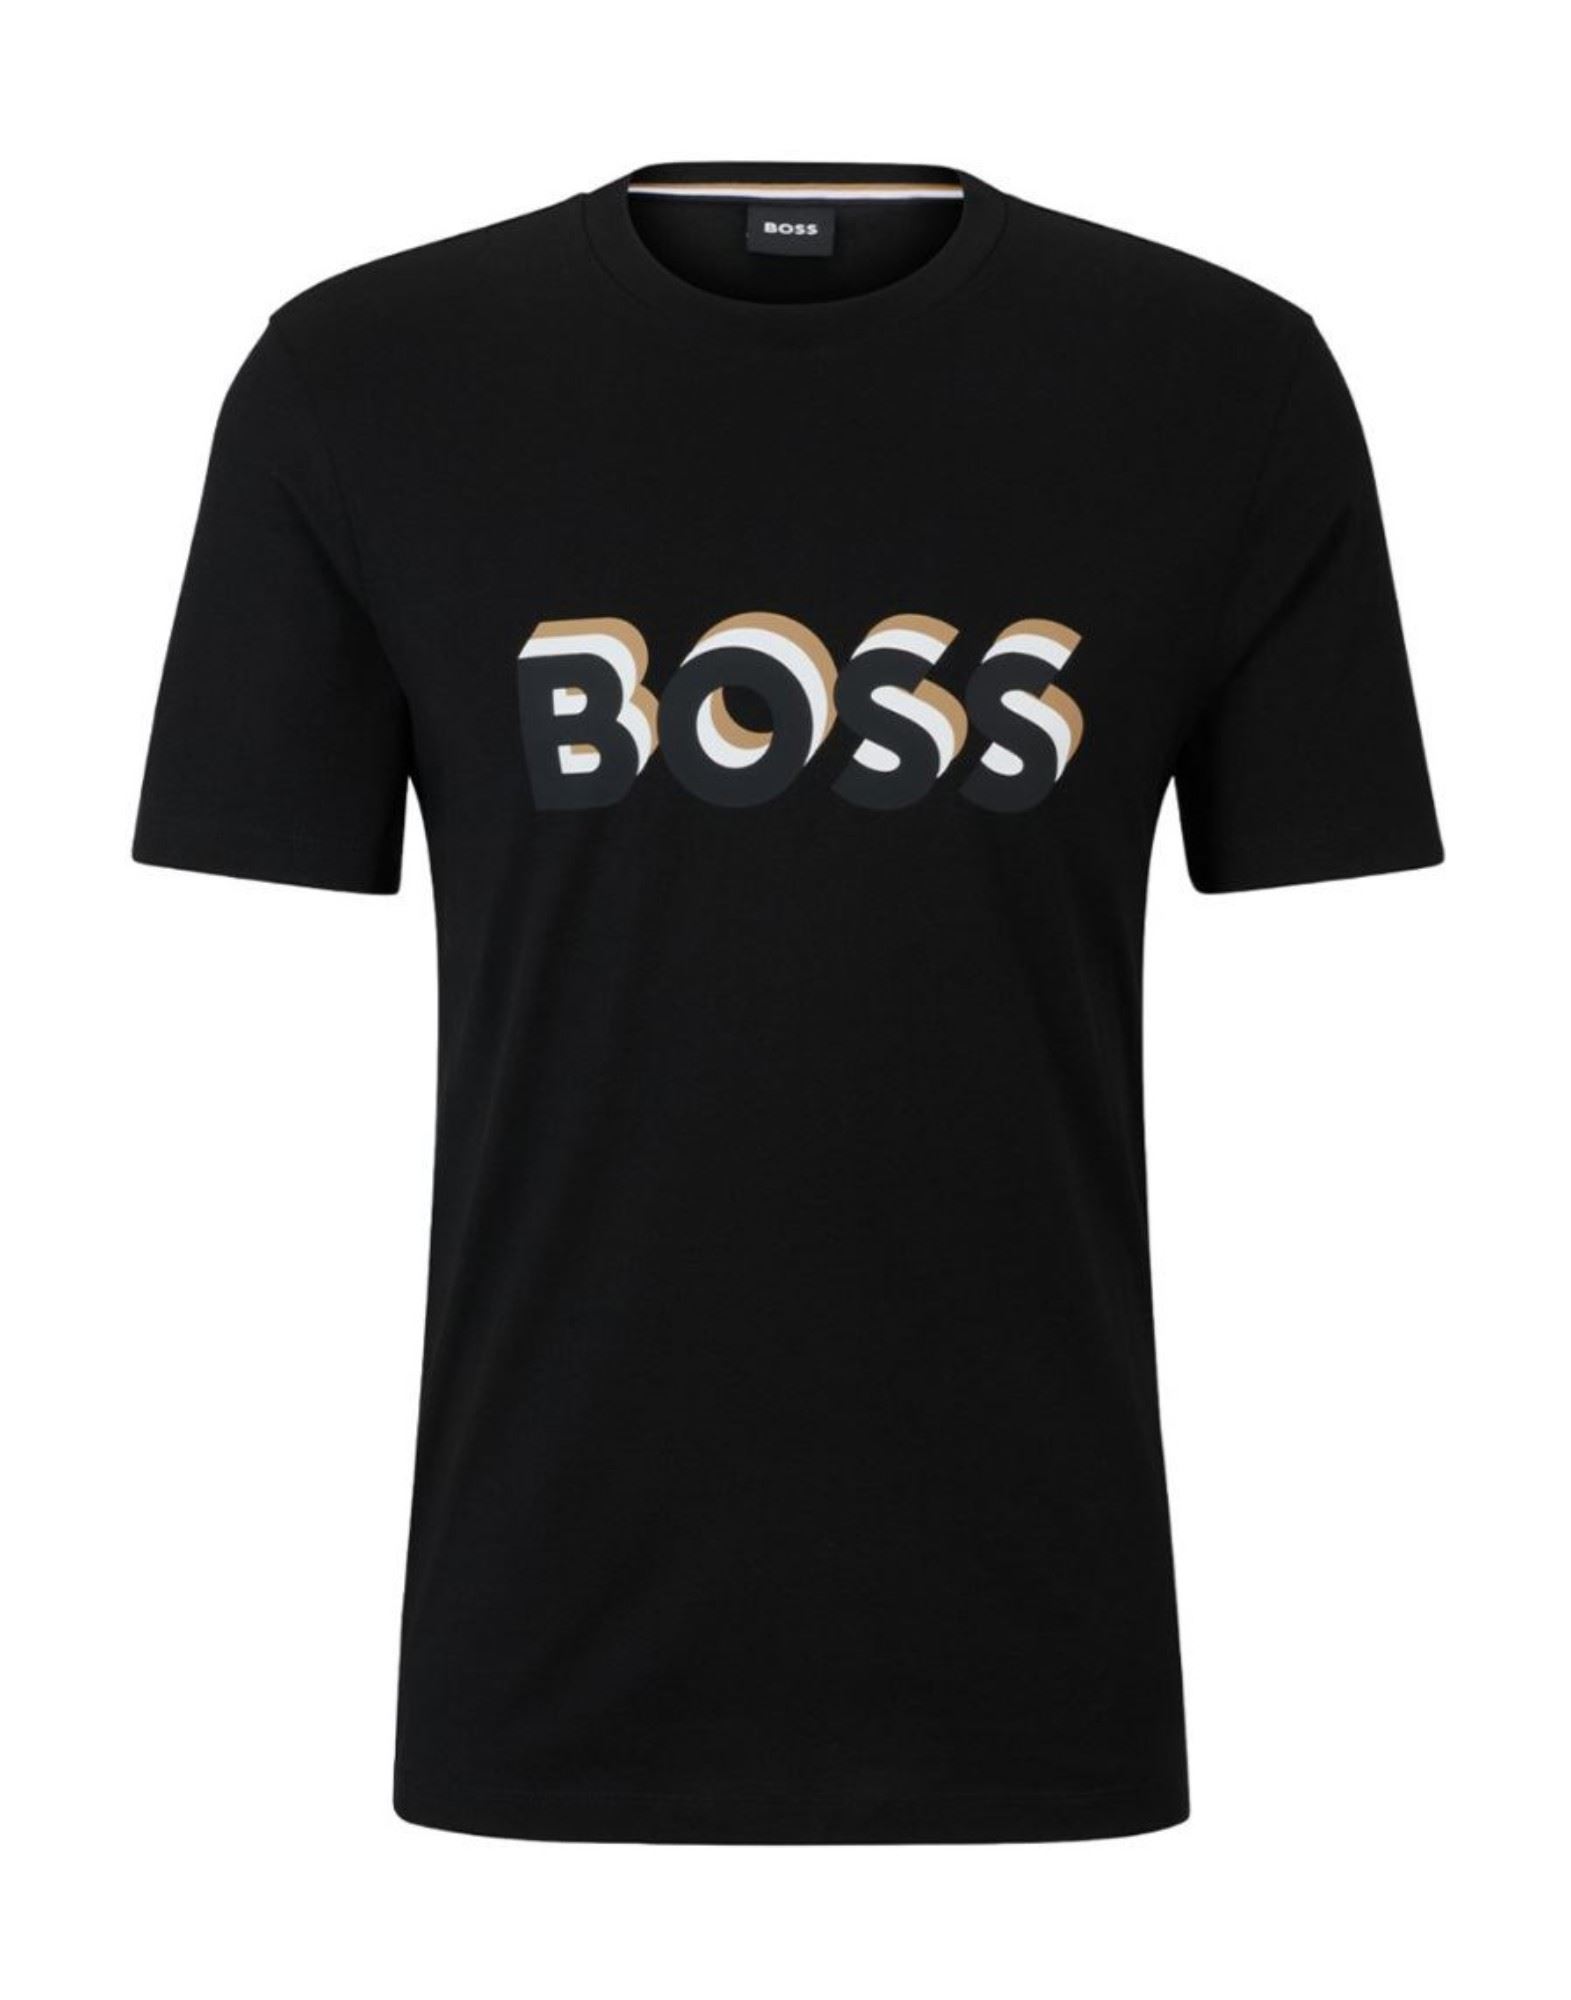 BOSS HUGO BOSS T-shirts Herren Schwarz von BOSS HUGO BOSS